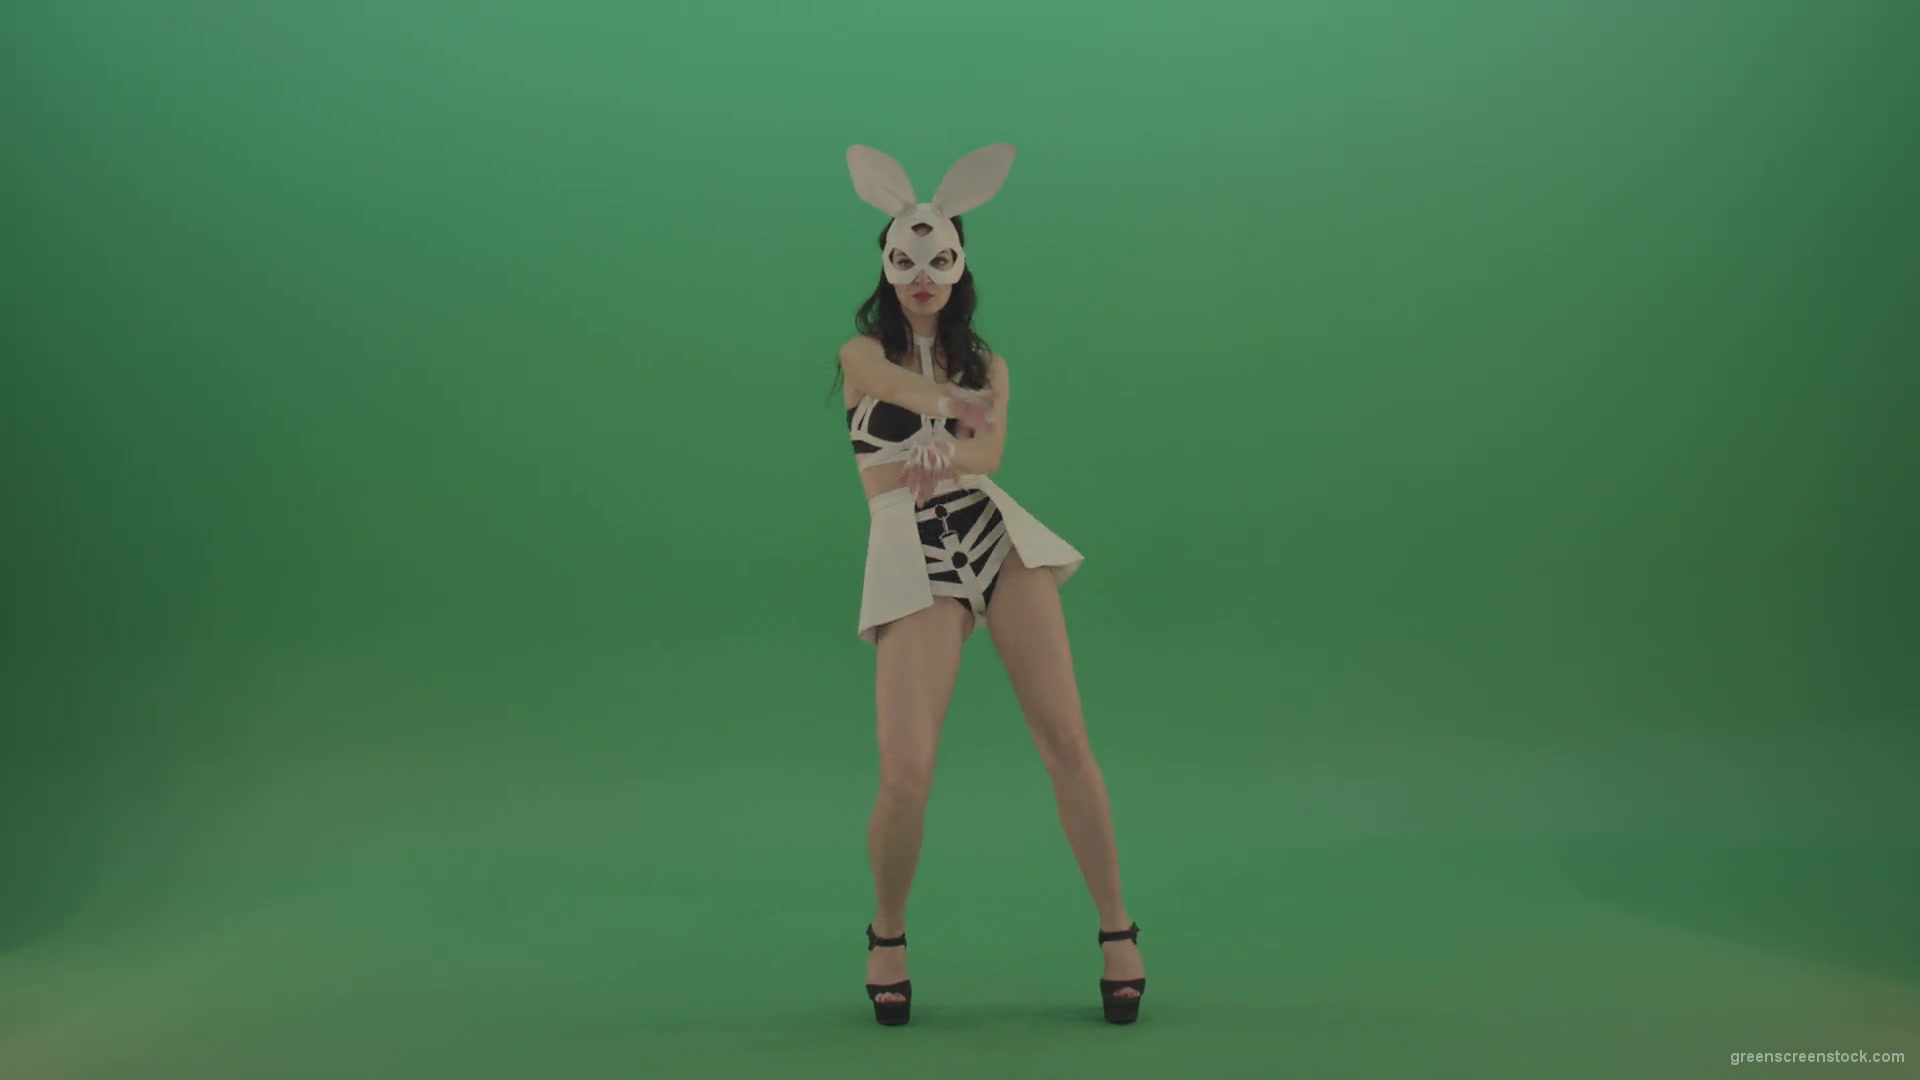 Sexy-posing-Bunny-Girl-dancing-Go-Go-Rabbit-Dance-over-Green-Screen-1920_002 Green Screen Stock